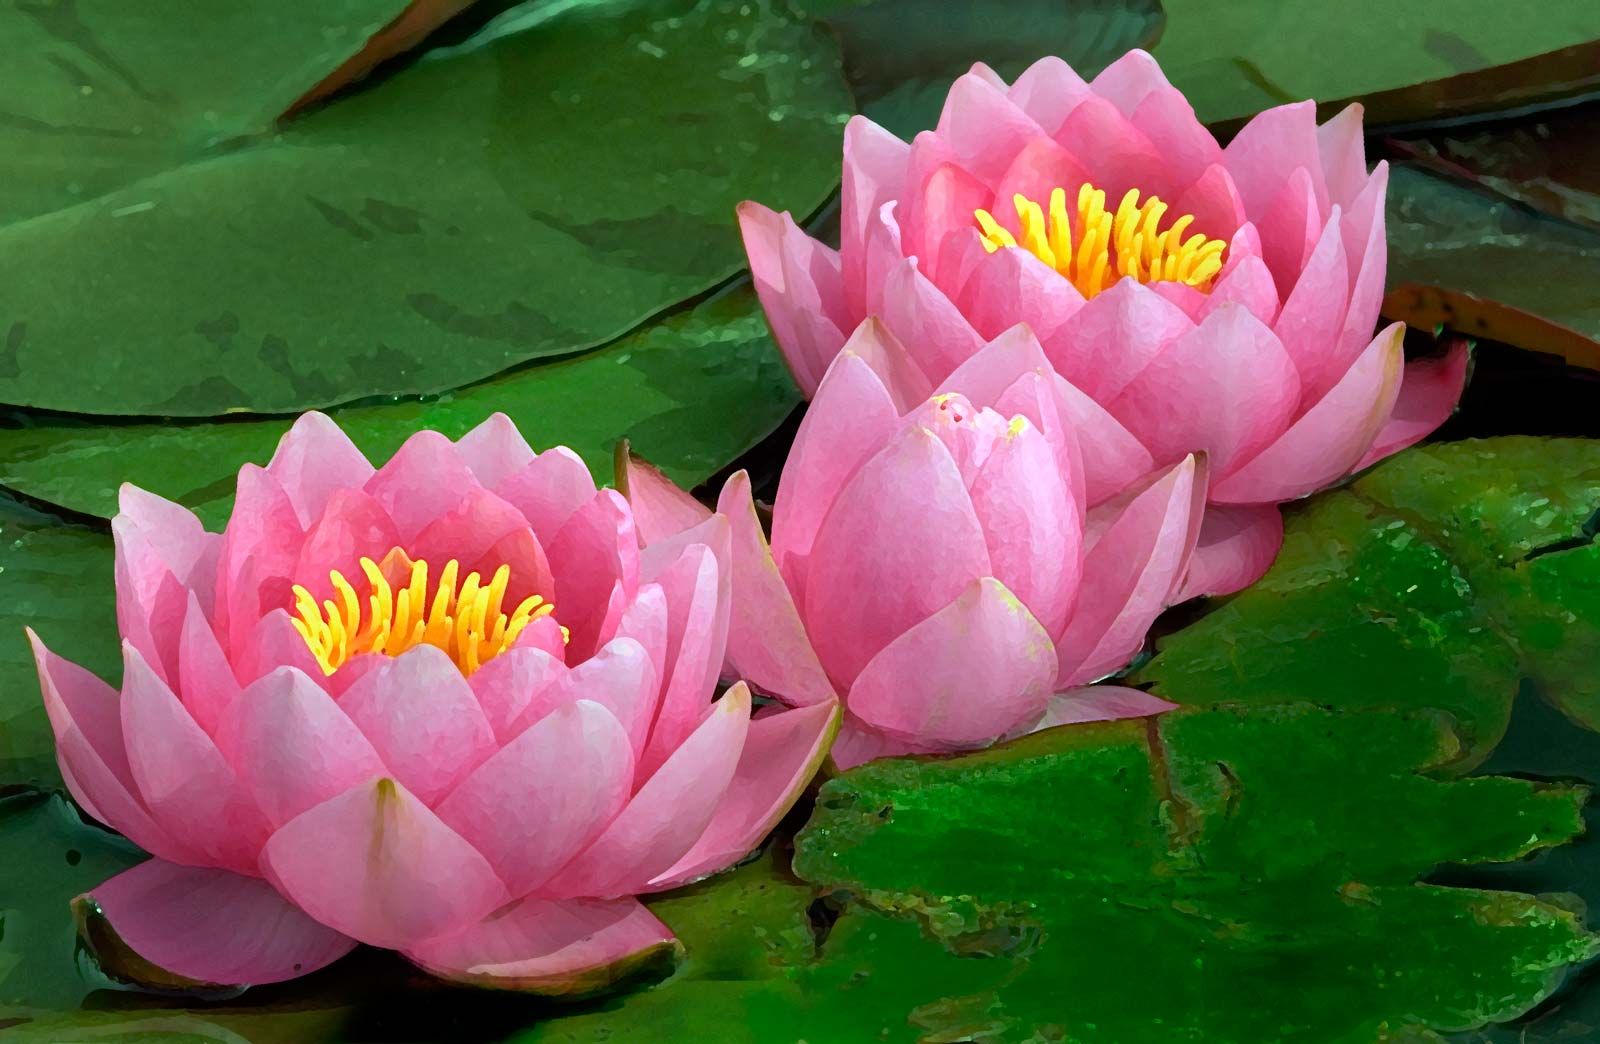 Water Lily vs Lotus